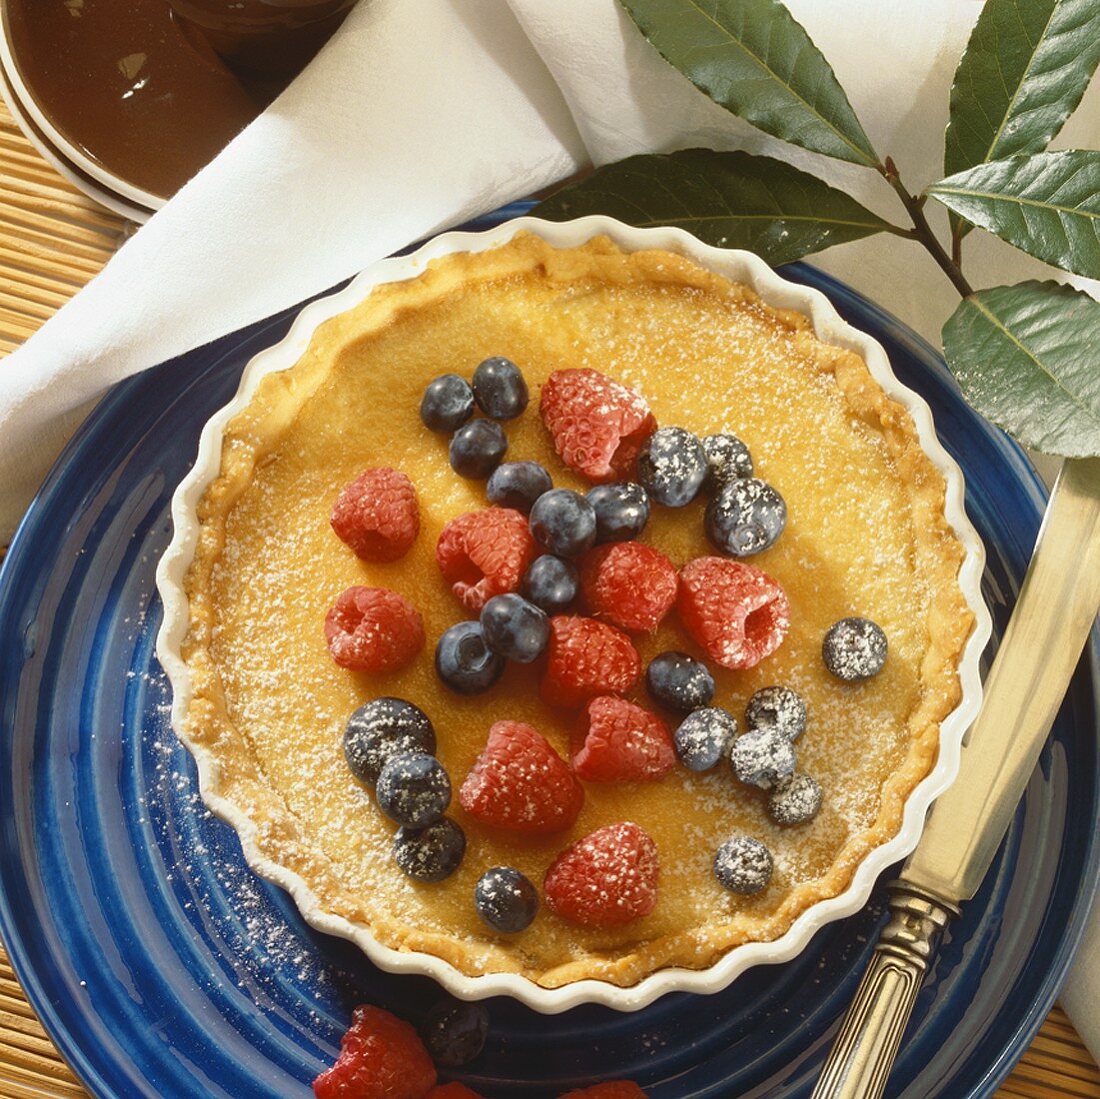 Lemon sour cream tart garnished with summer berries